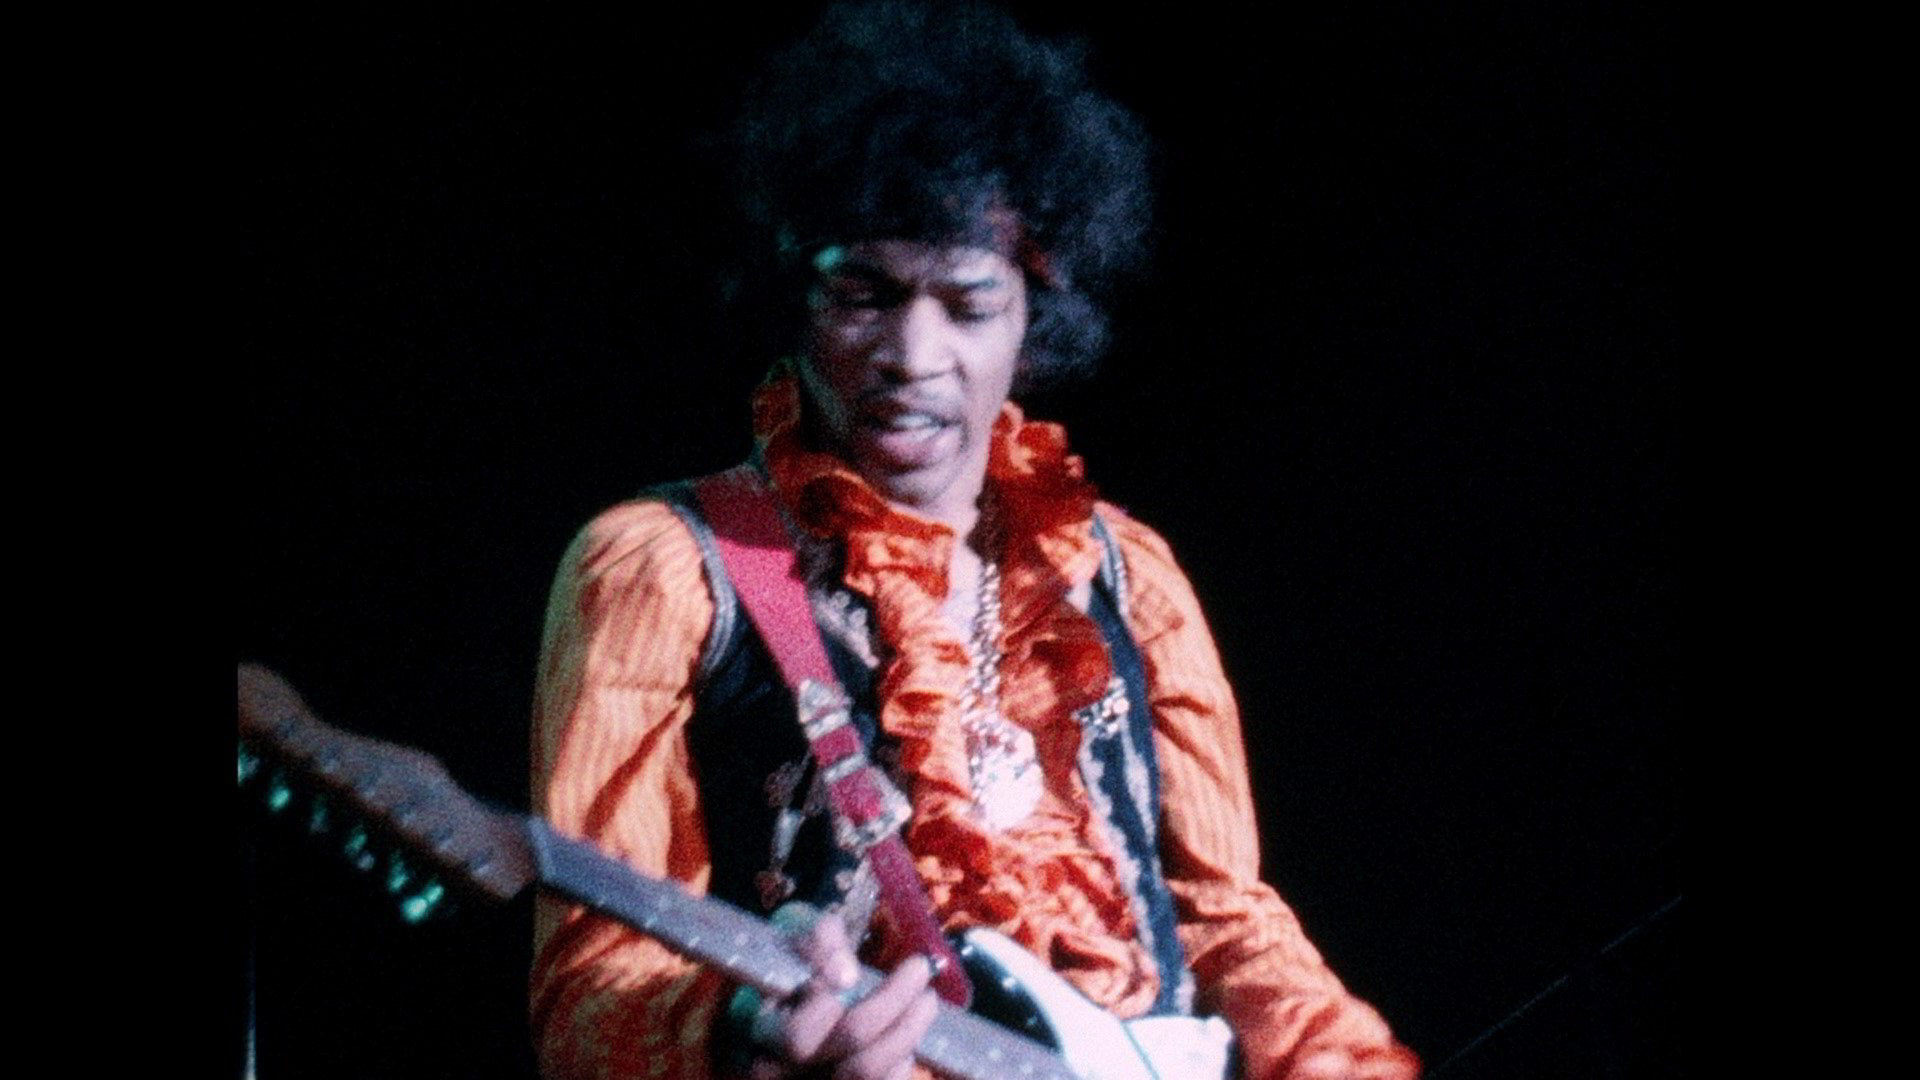 Jimi Hendrix Photos